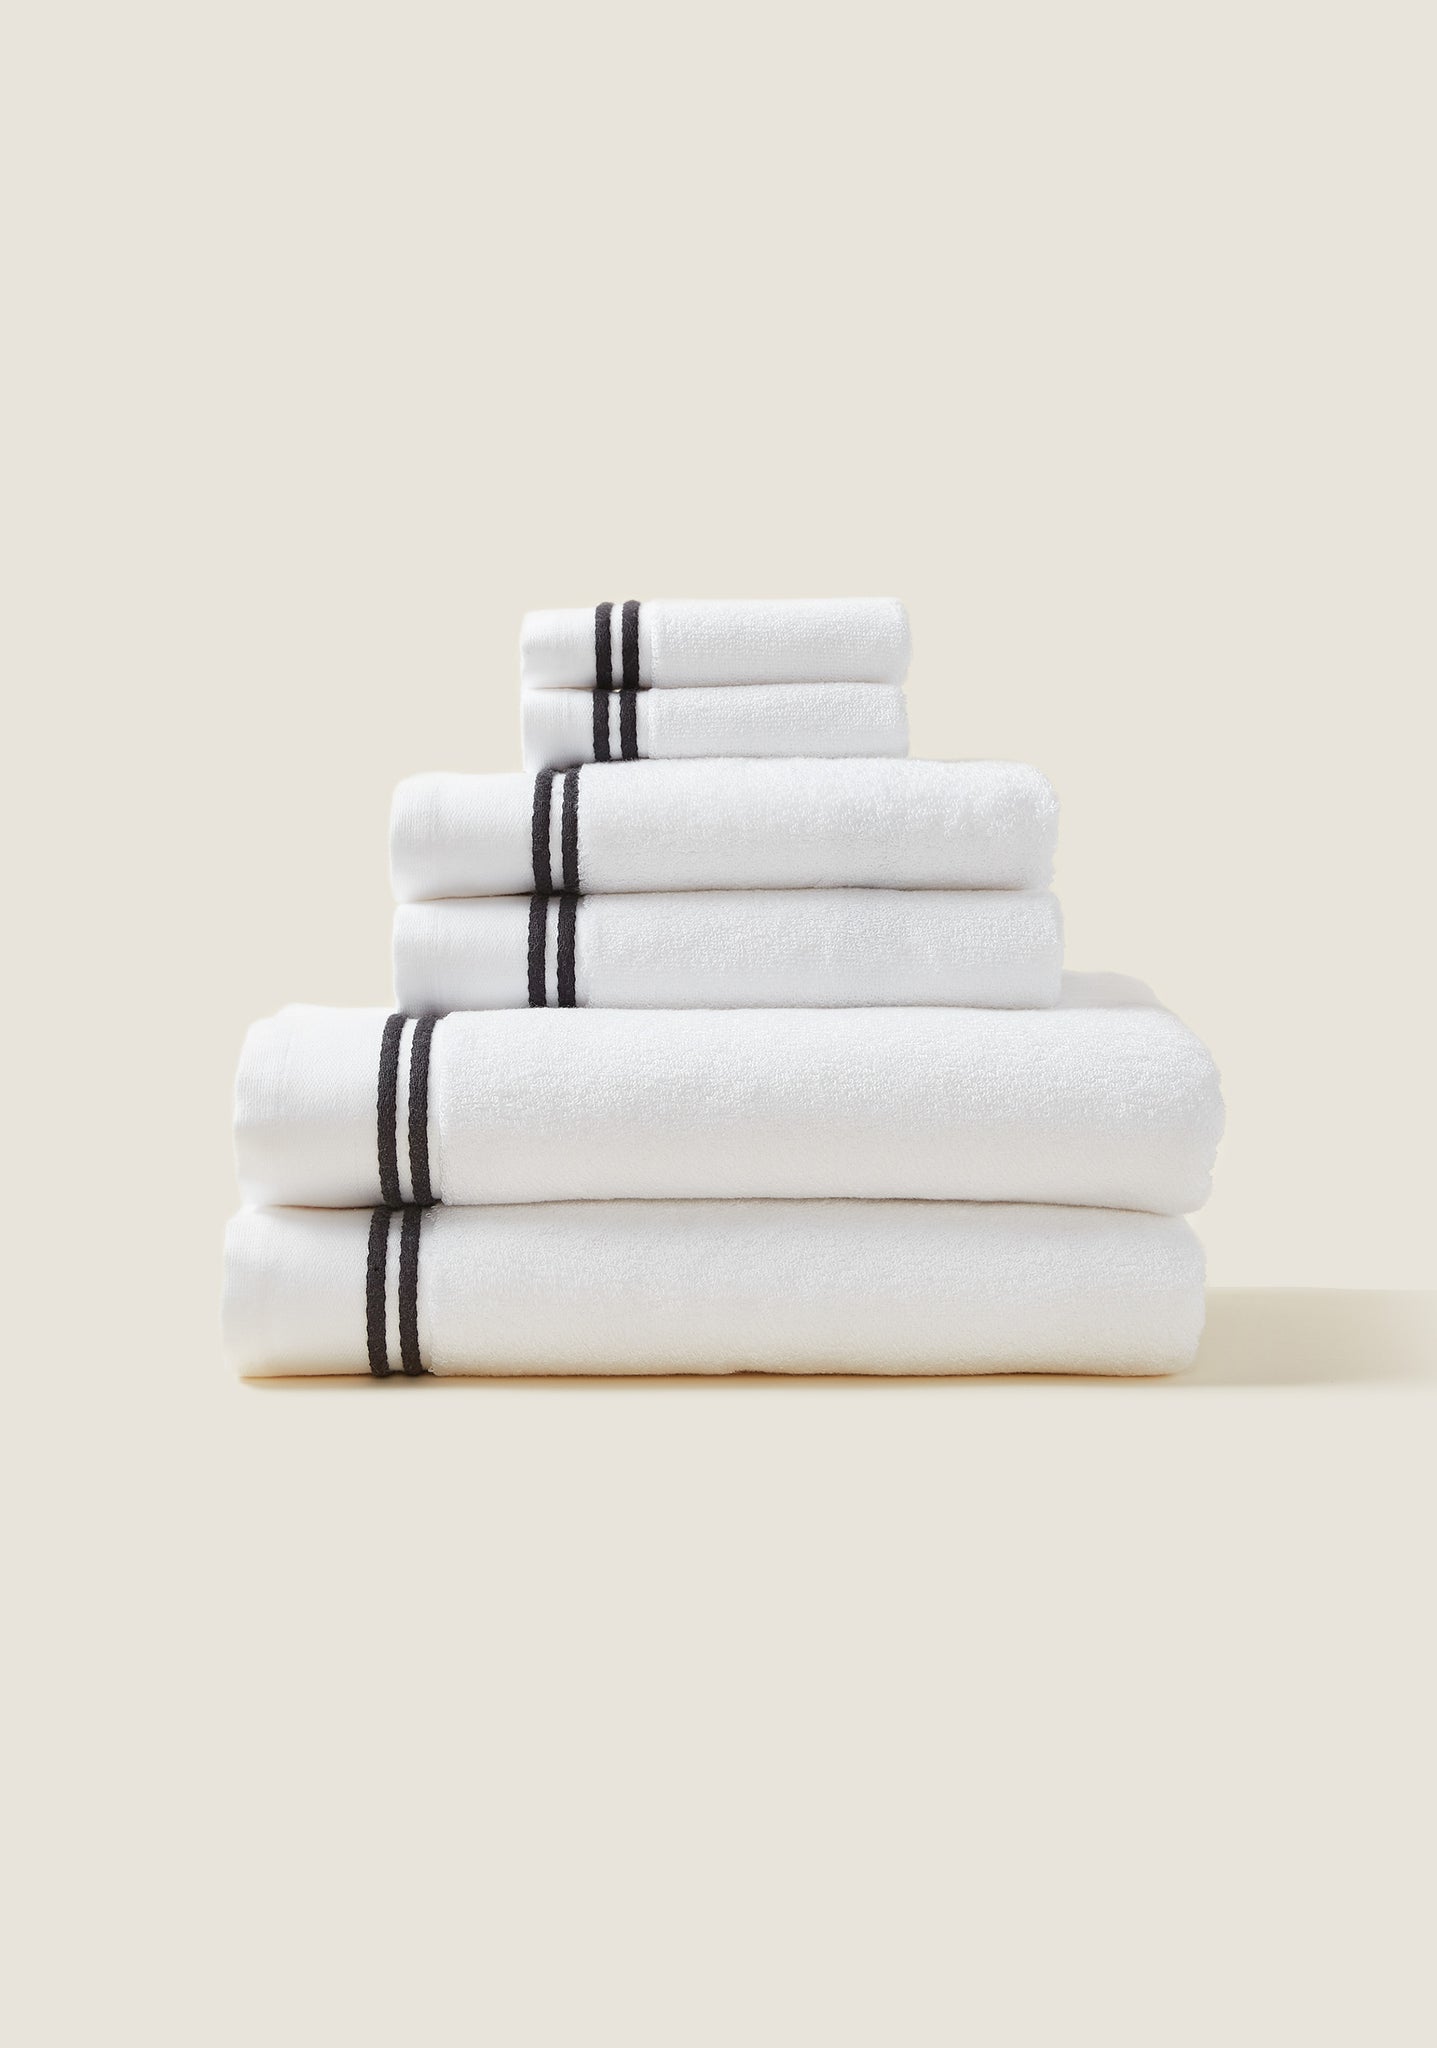 Three Color Hand Drawn Chevrons Bath Towel - 30 x 60 - Bed Bath & Beyond -  28496273